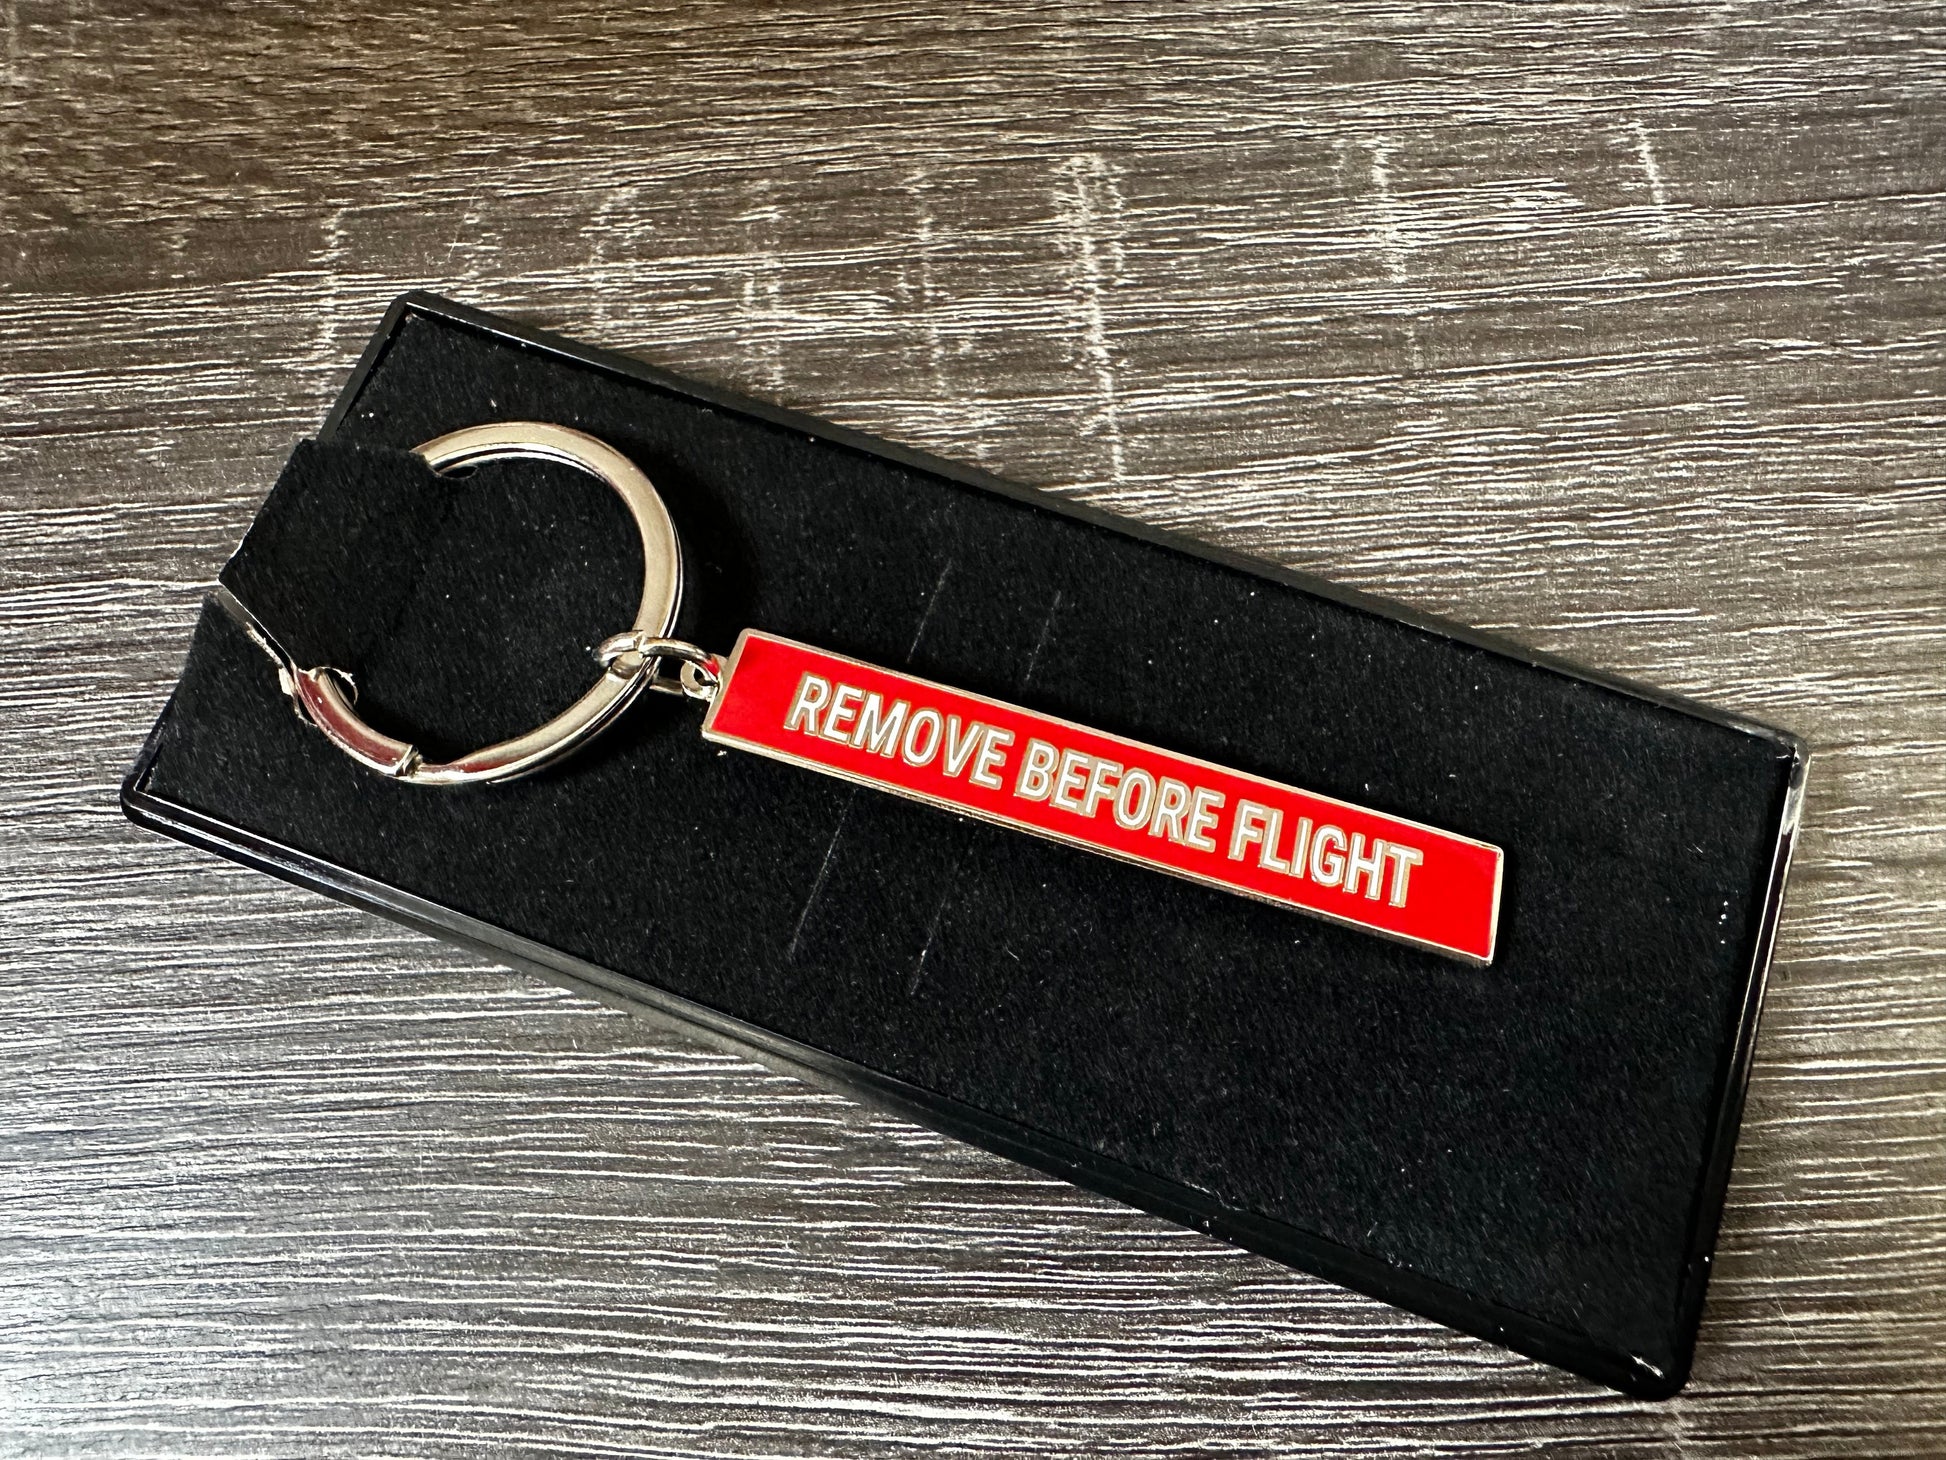 Remove before flight keychain keyring